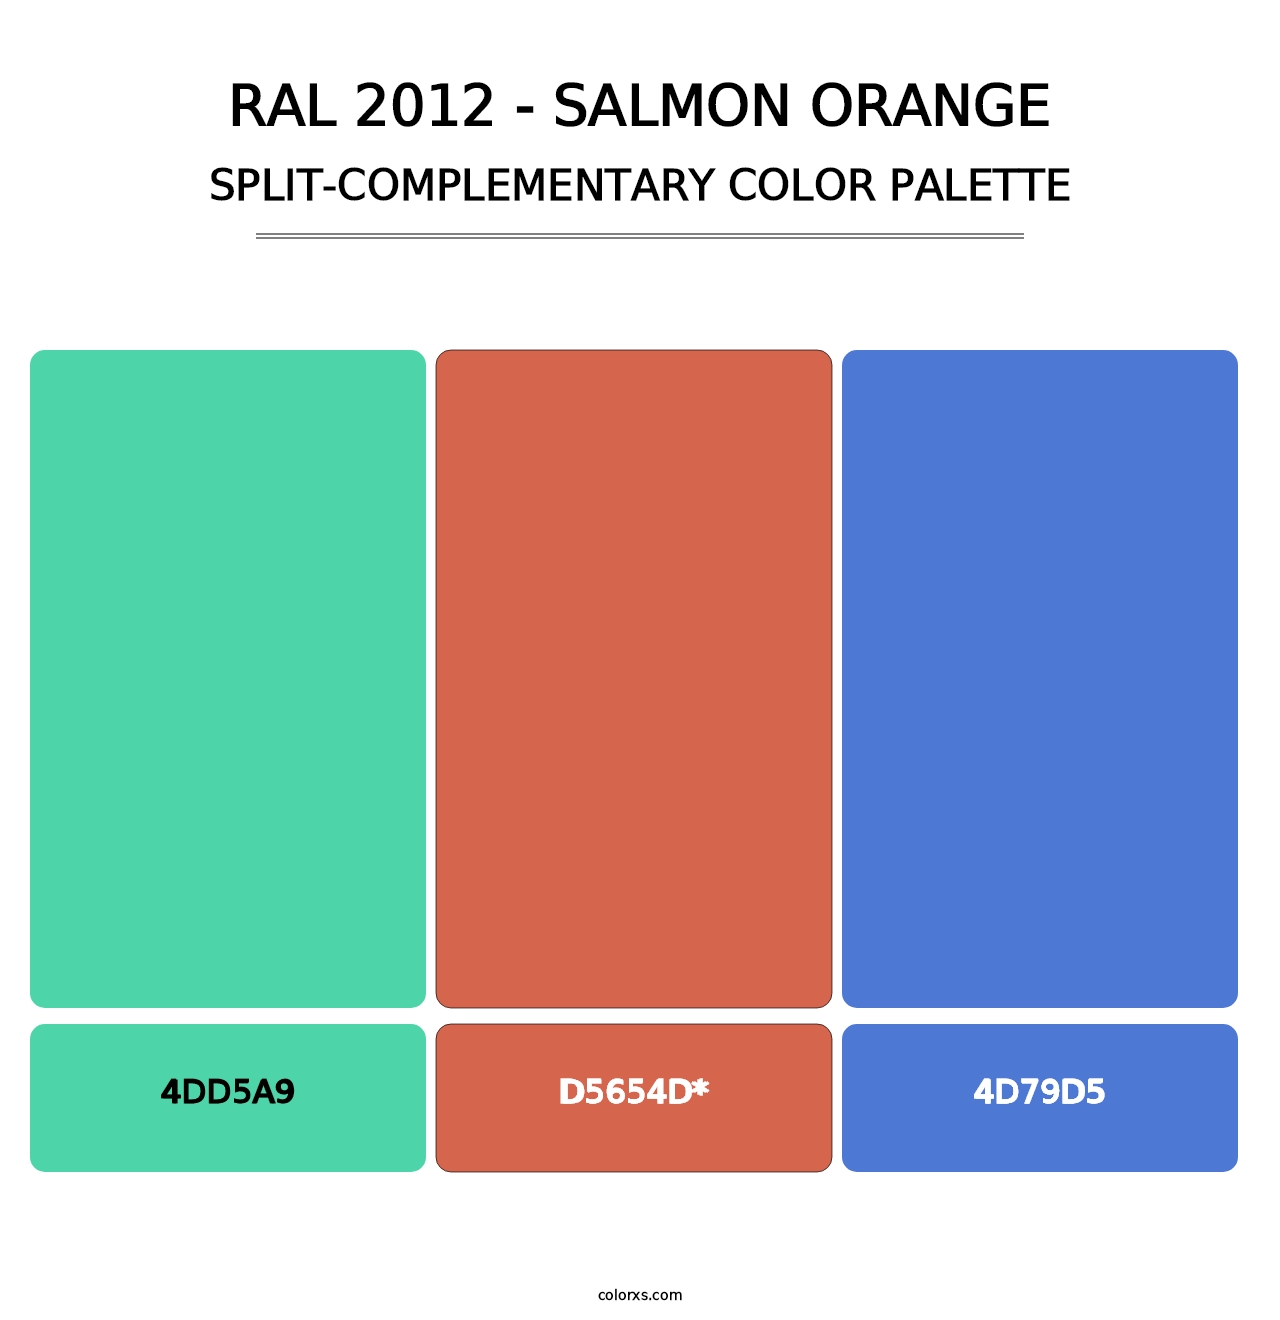 RAL 2012 - Salmon Orange - Split-Complementary Color Palette